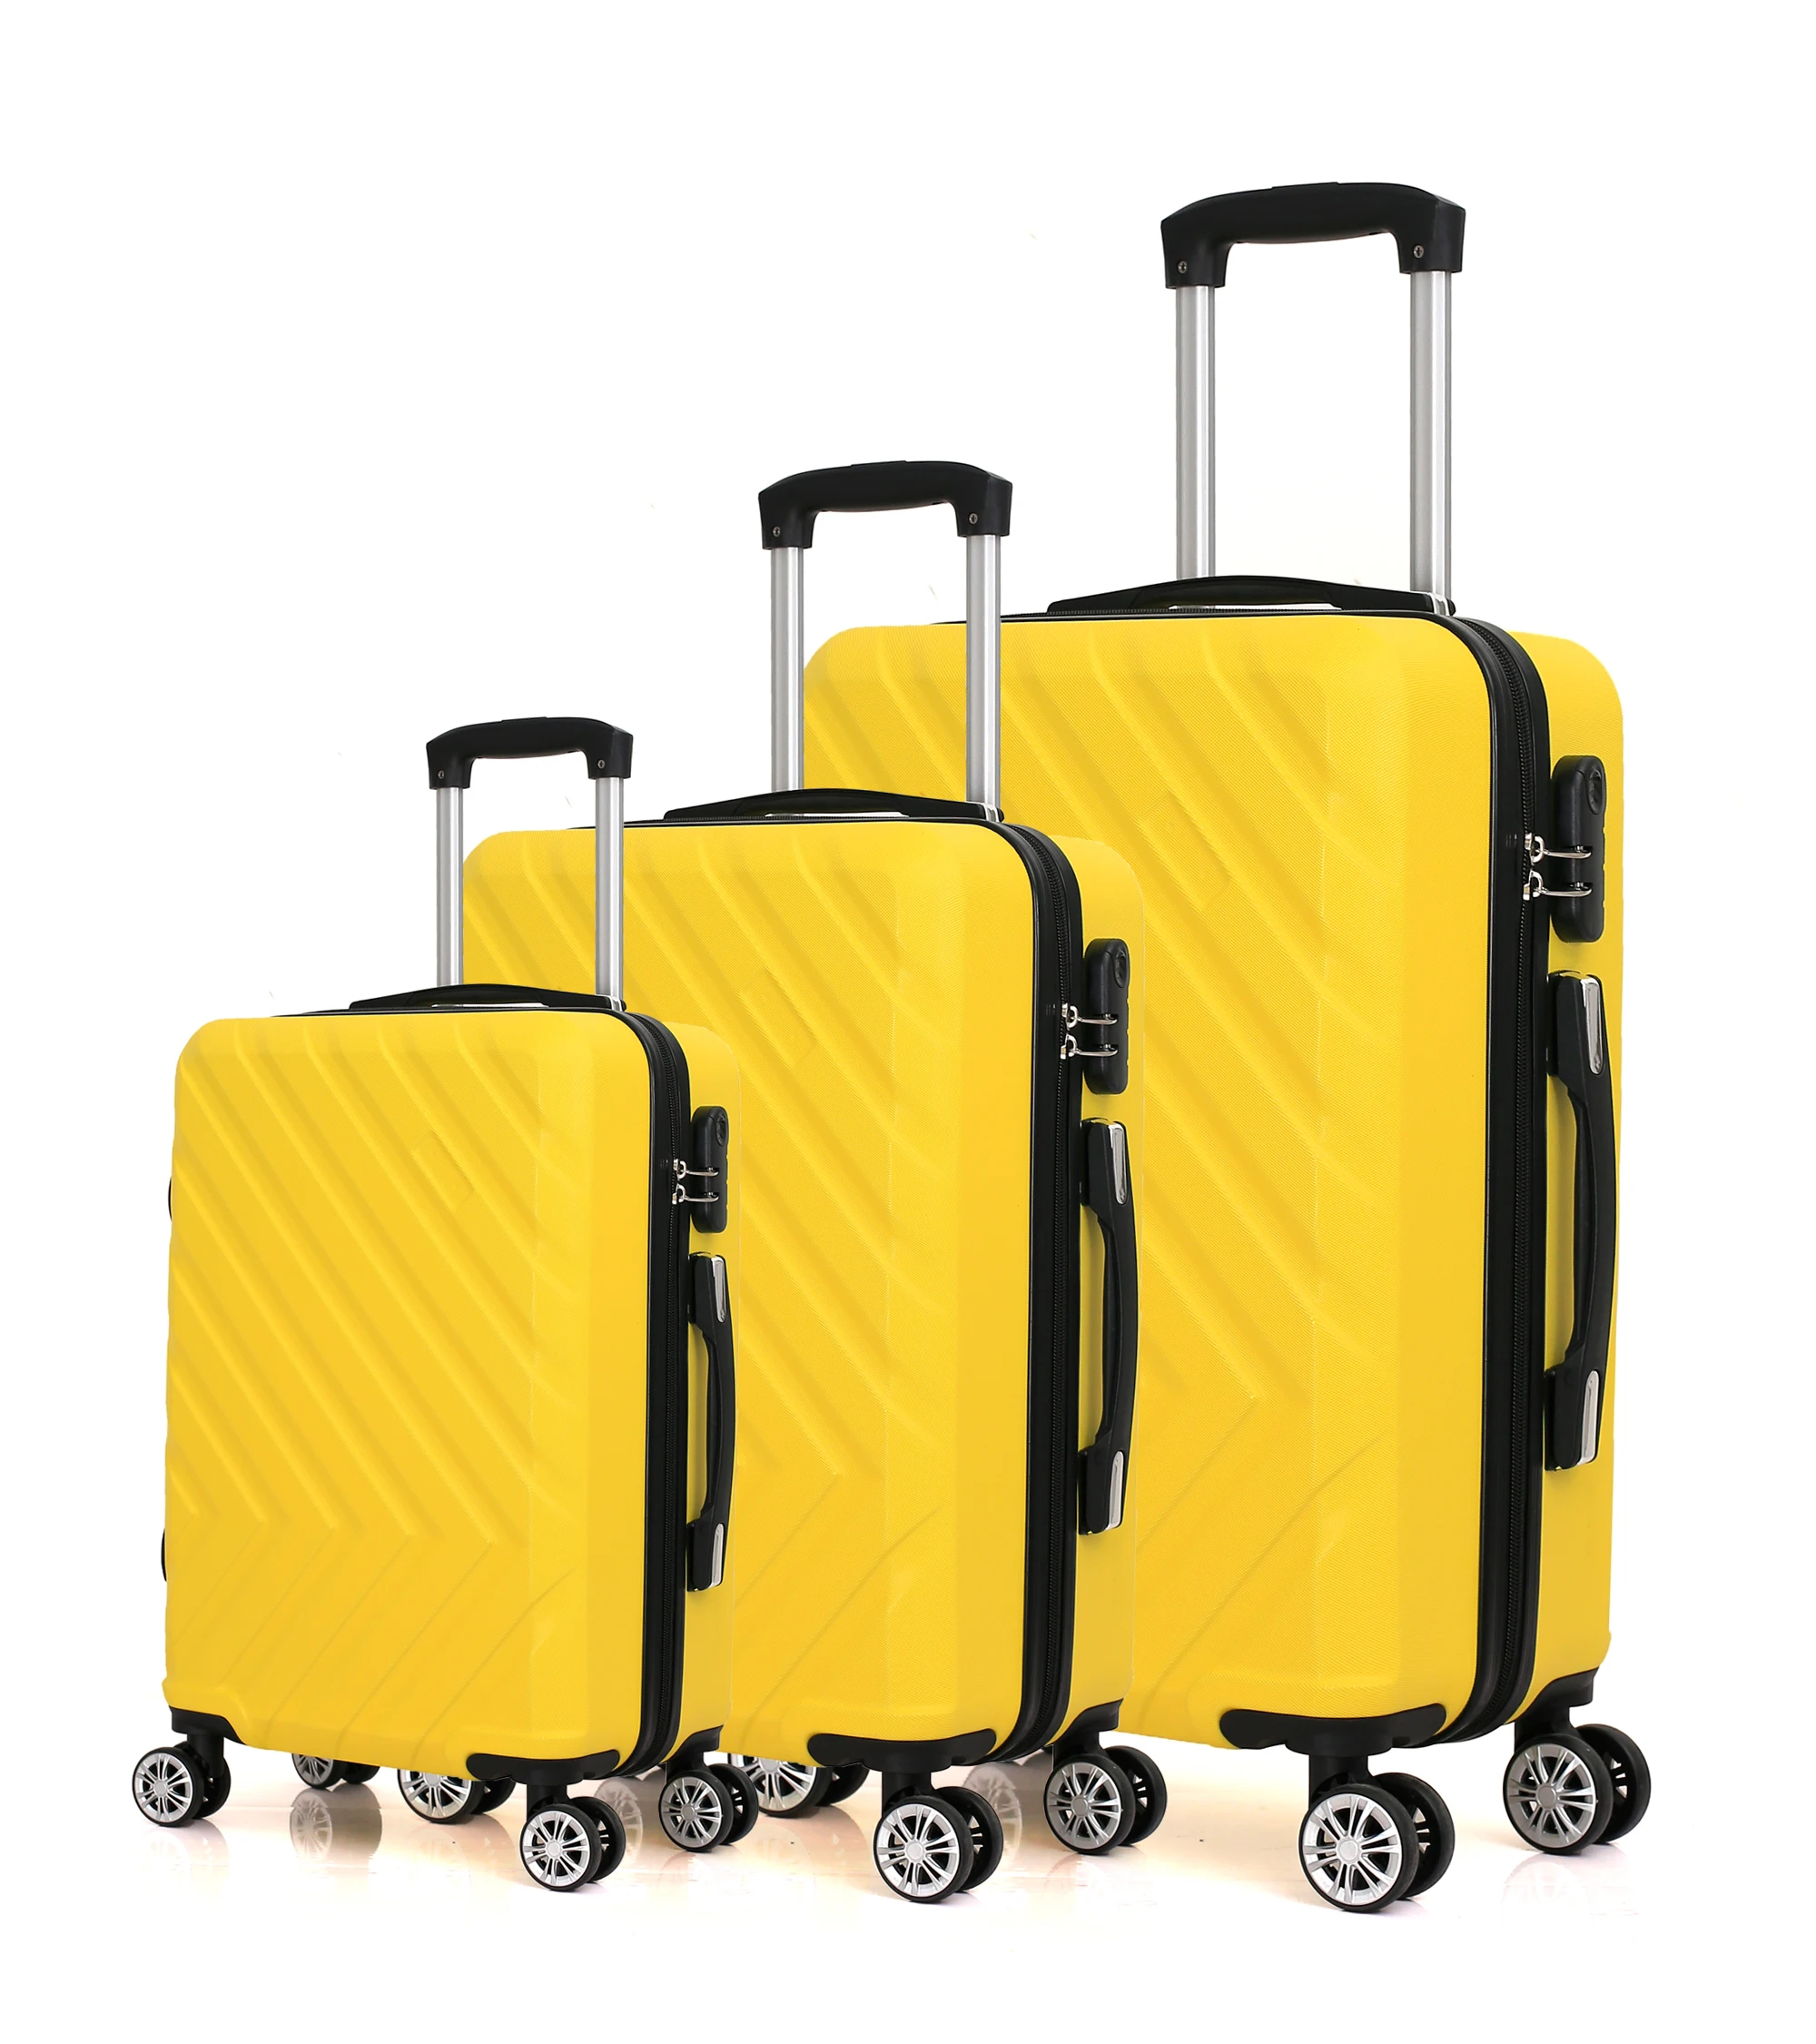 buy luggage set